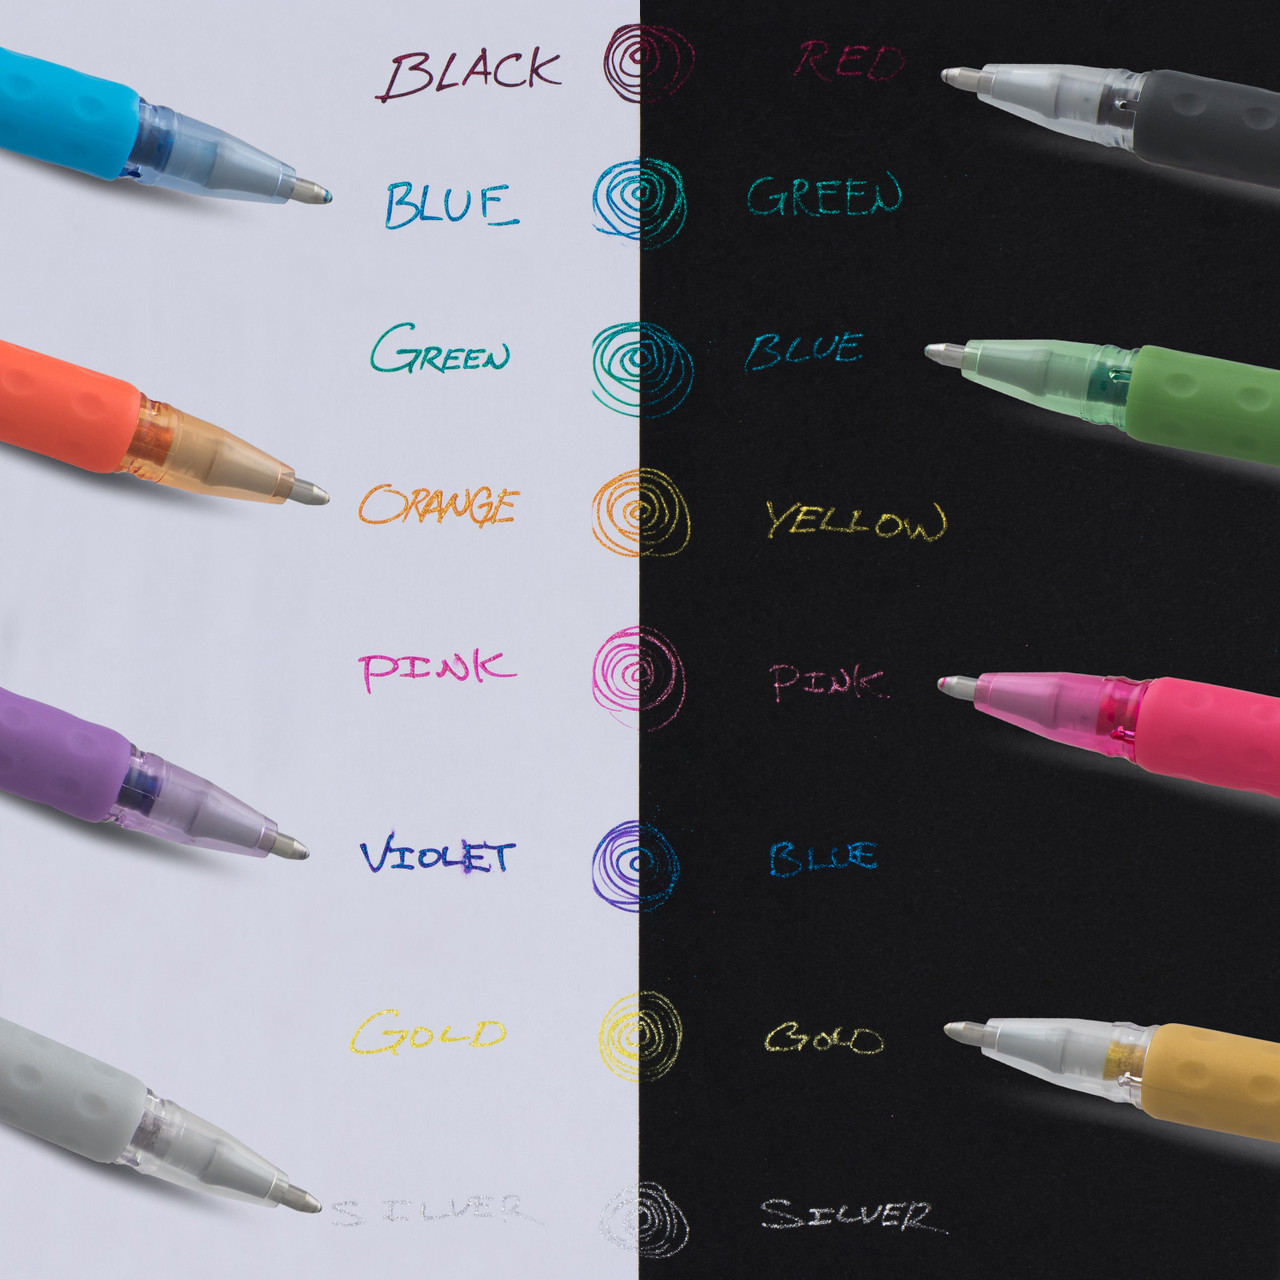 Pentel Sparkle Pop Metallic Gel Pens 1.0mm 4/Pkg-Blue, Pink, Purple, Gold  K91BP4-M1 - GettyCrafts